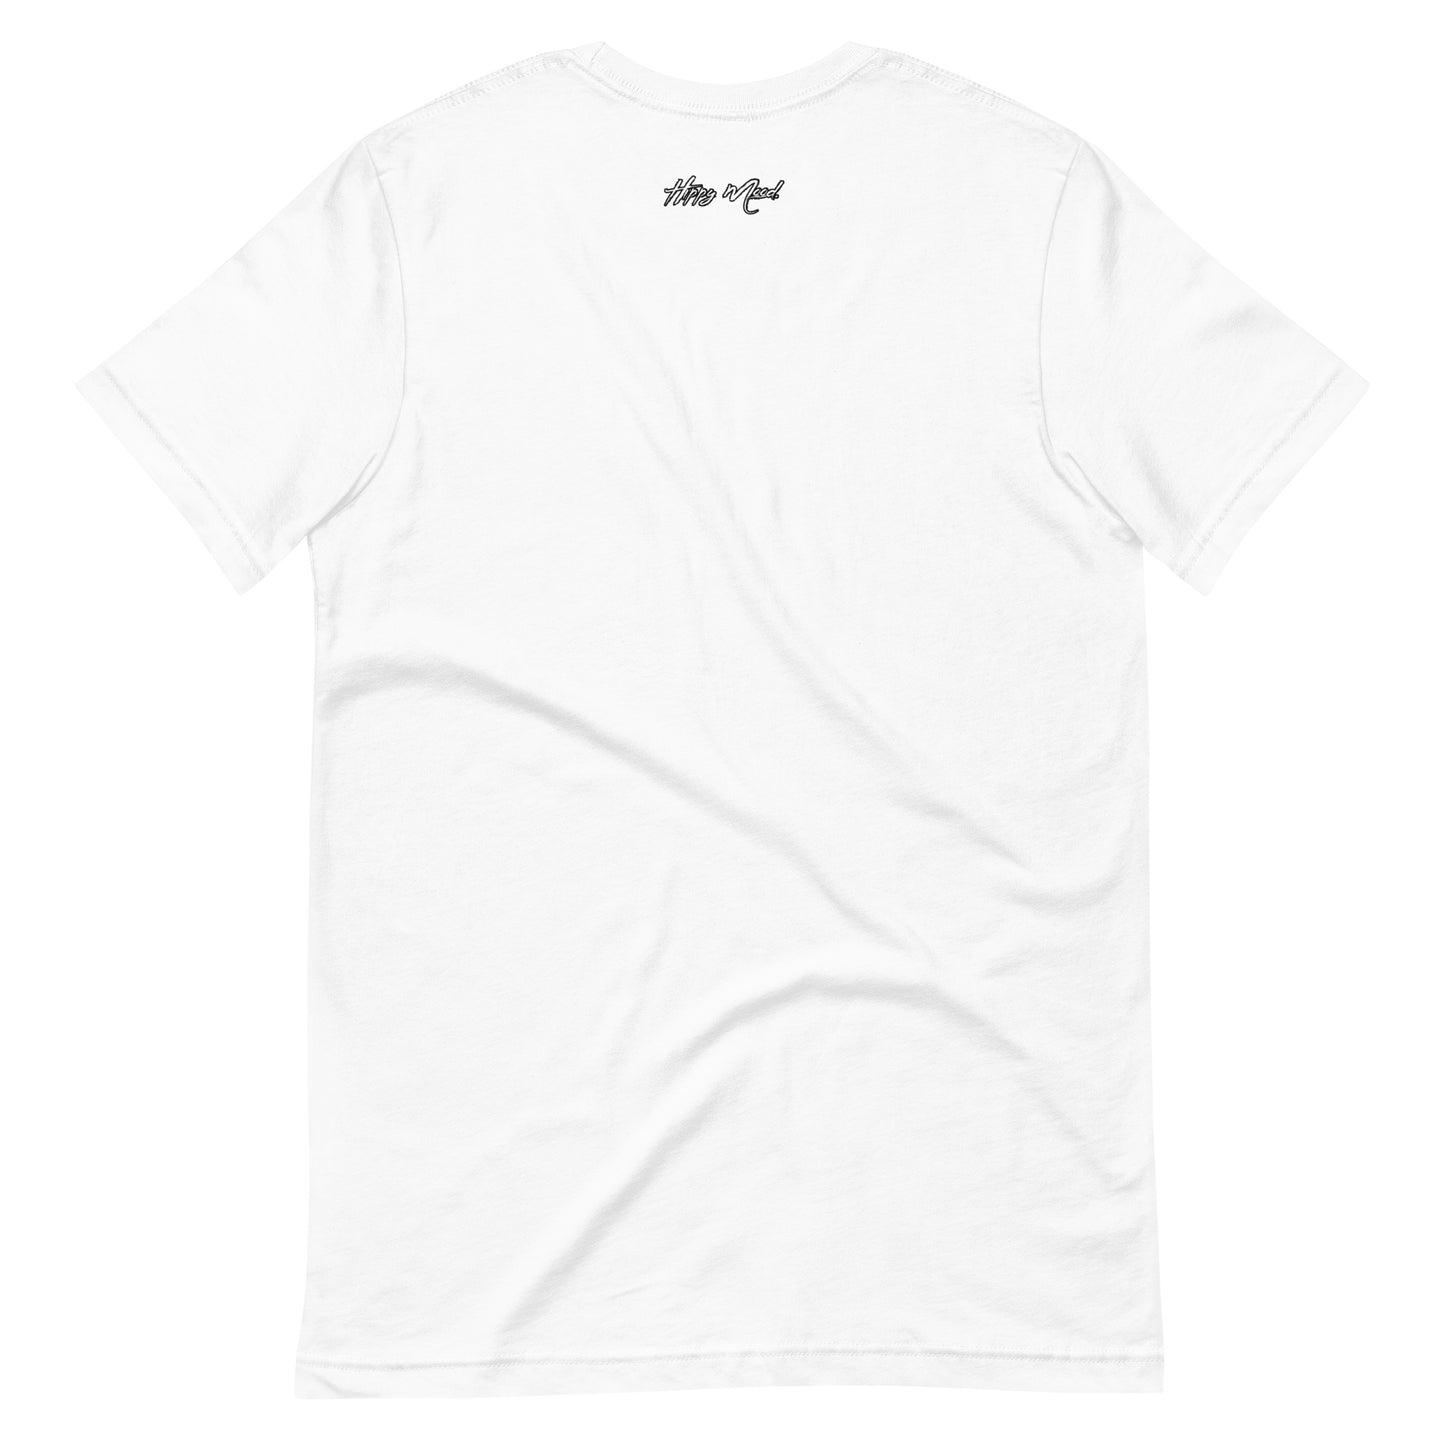 Brave | Unisex t-shirt